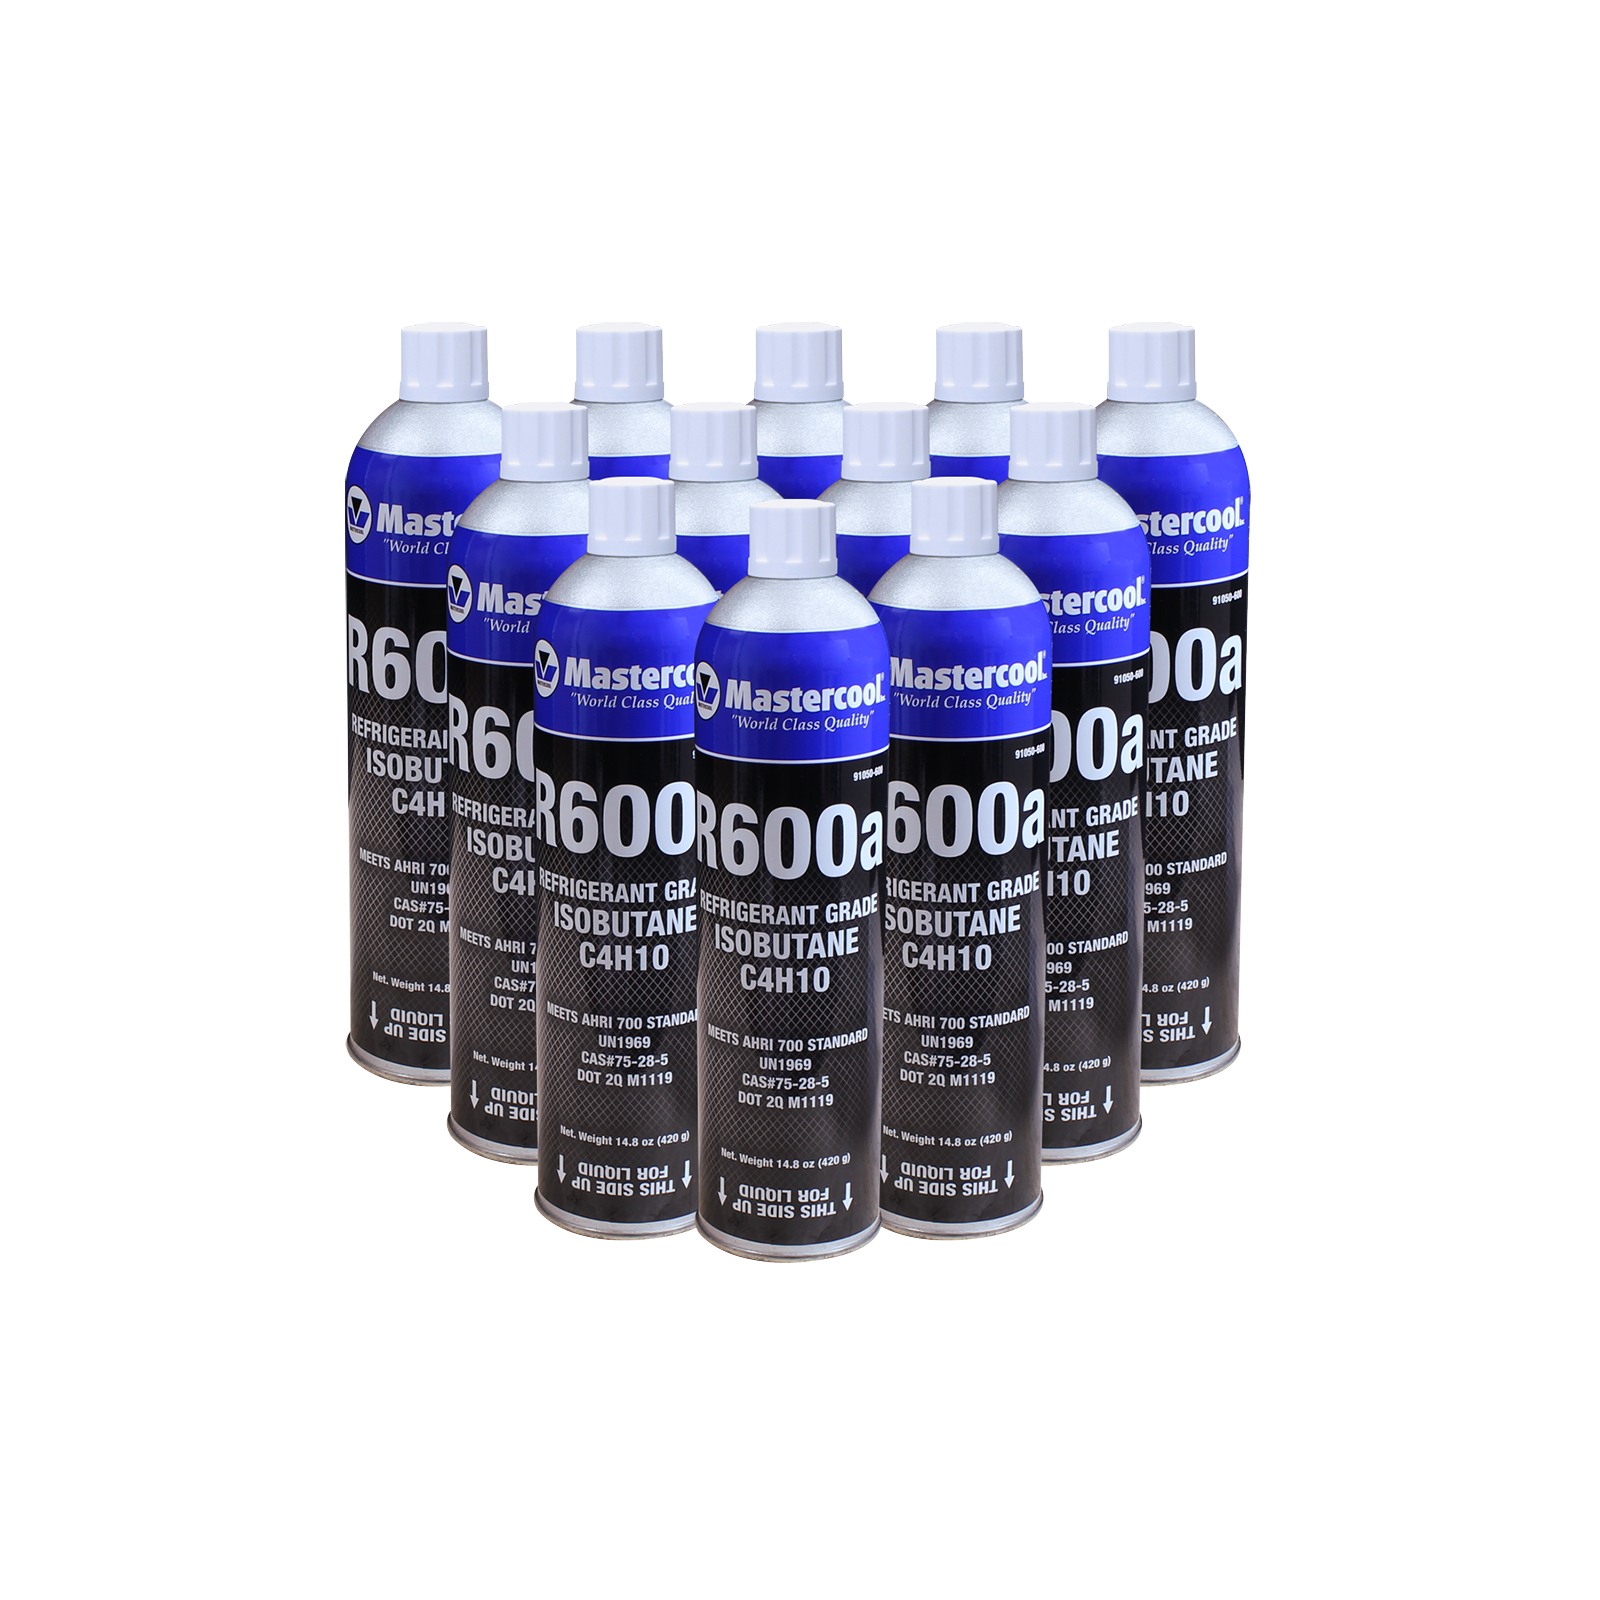 R600A, MODERN Refrigerant, 12 PACK, 1 Case, (12) 6 oz. Can, Isobutane,  R-600 Gas 816024042069 